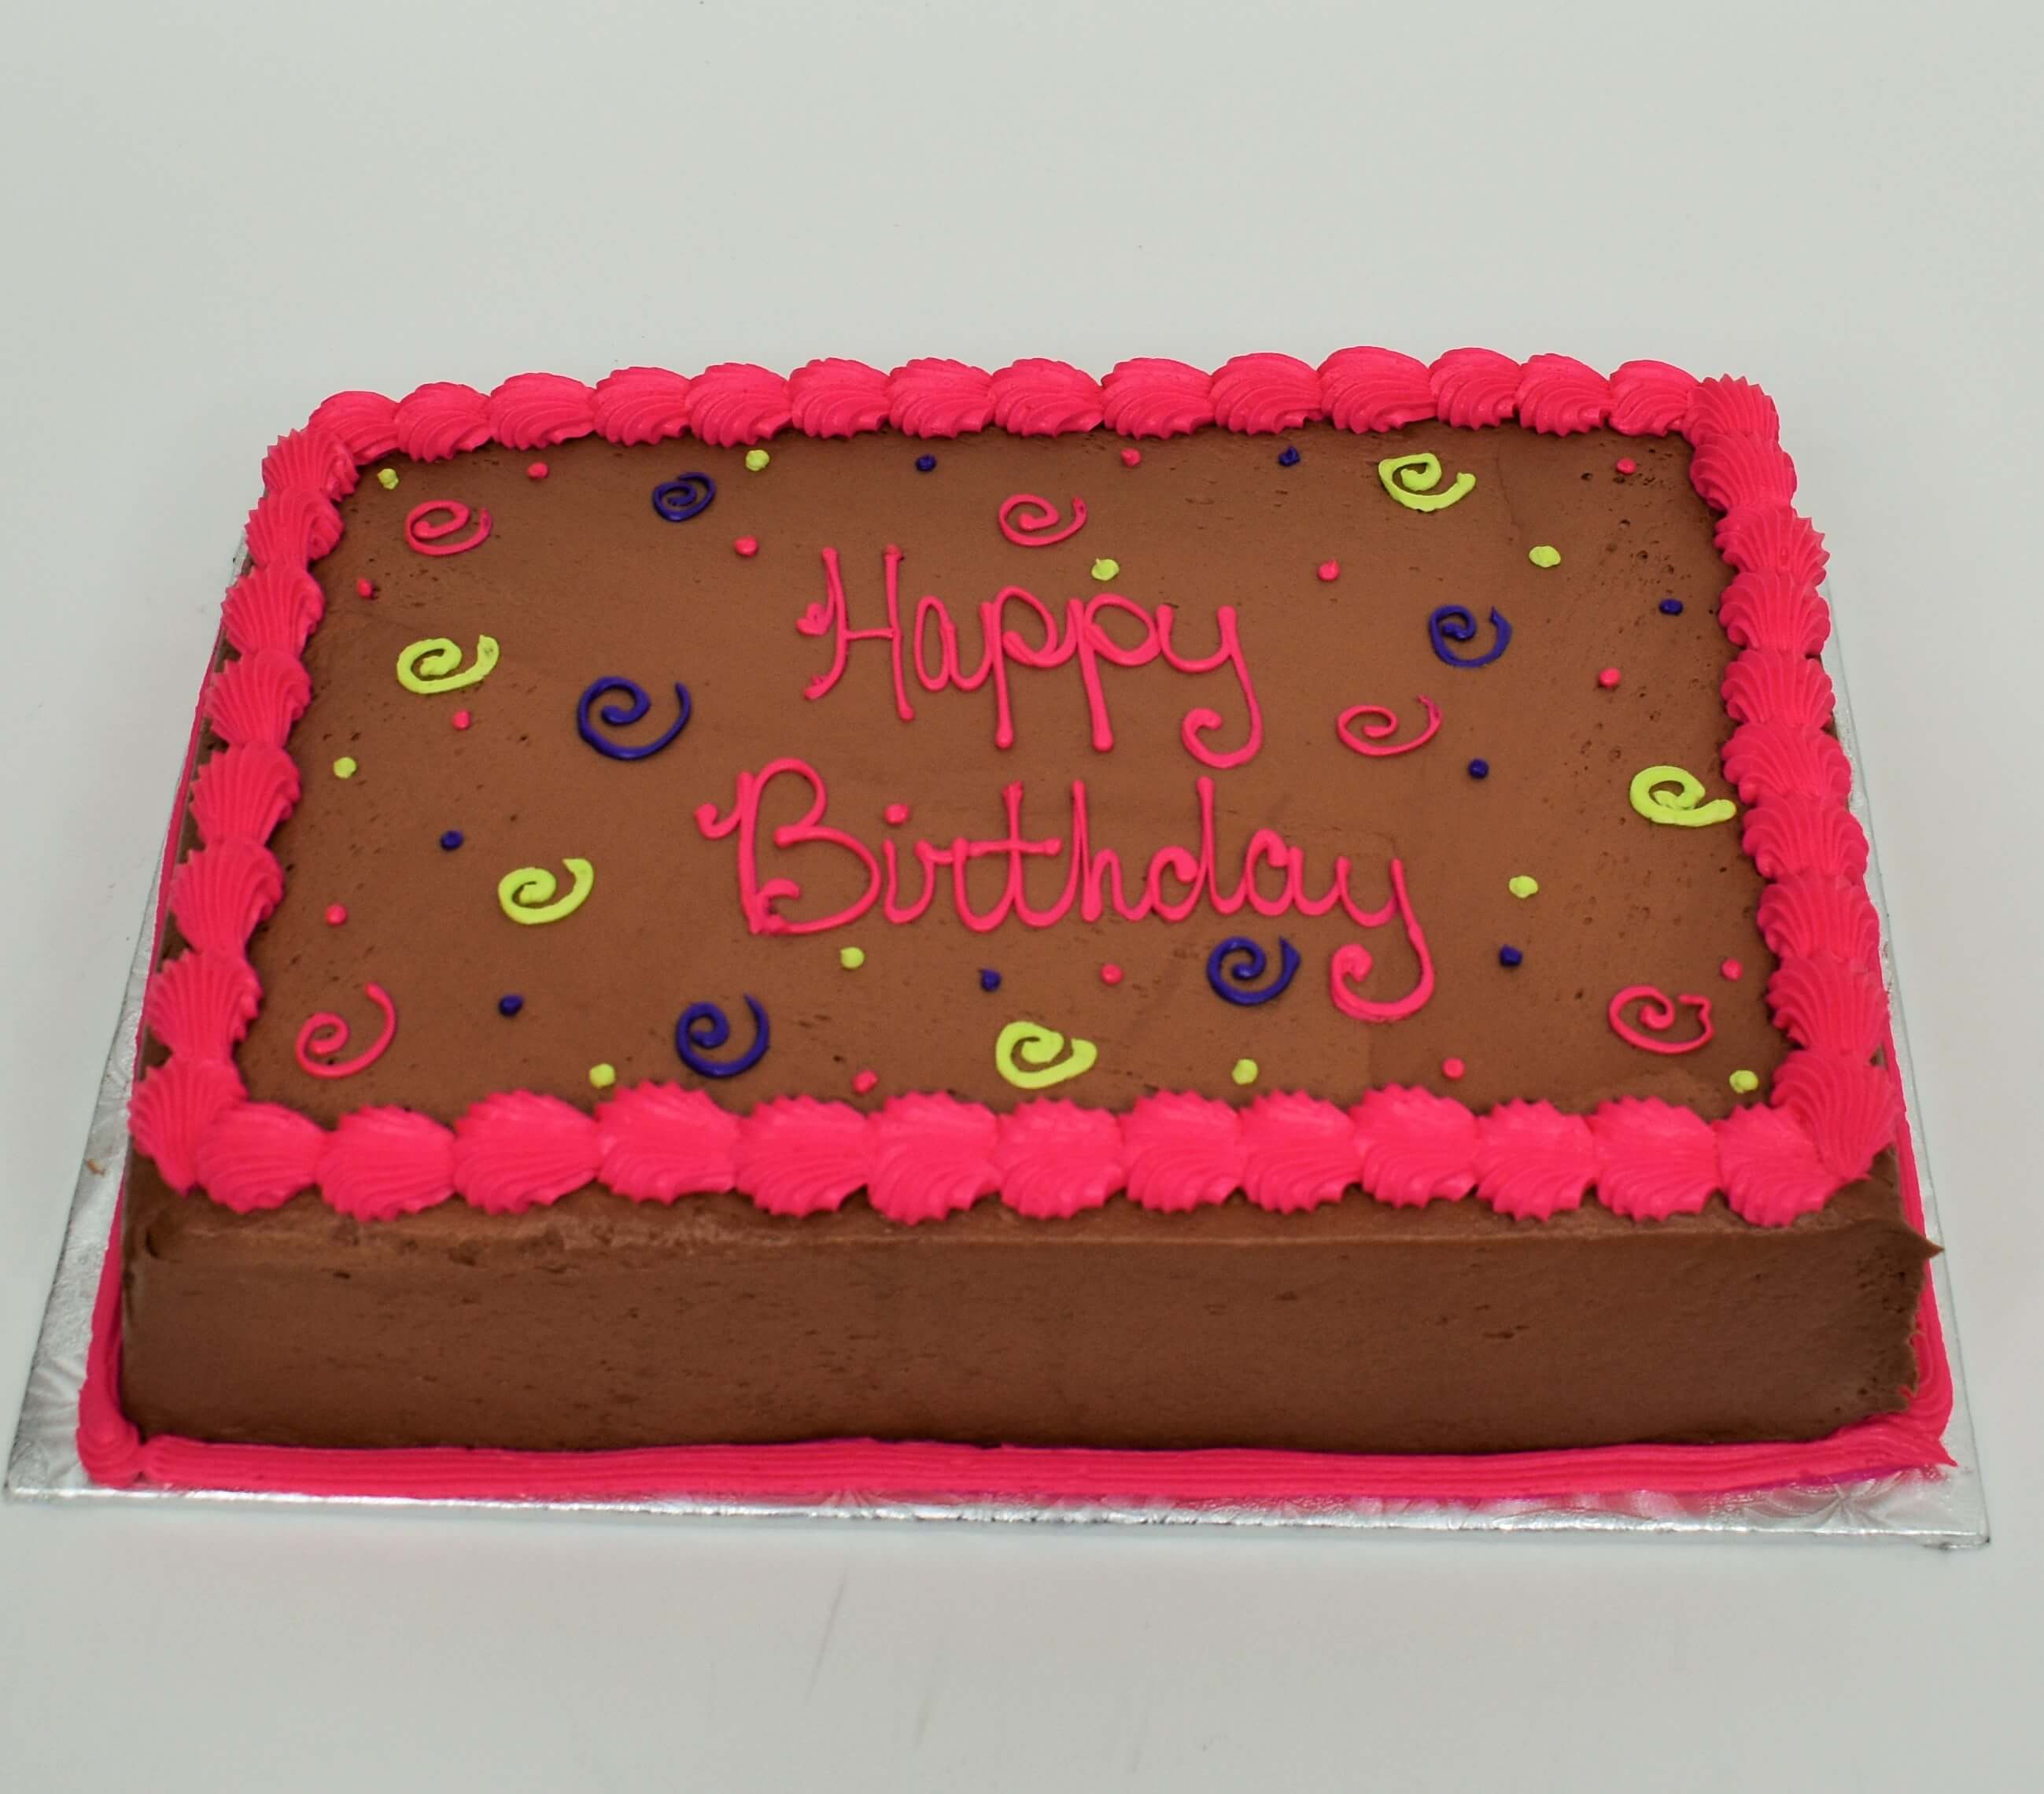 McArthur's Bakery Custom Cake with Chocolate Icing, Swirls and Polka Dots